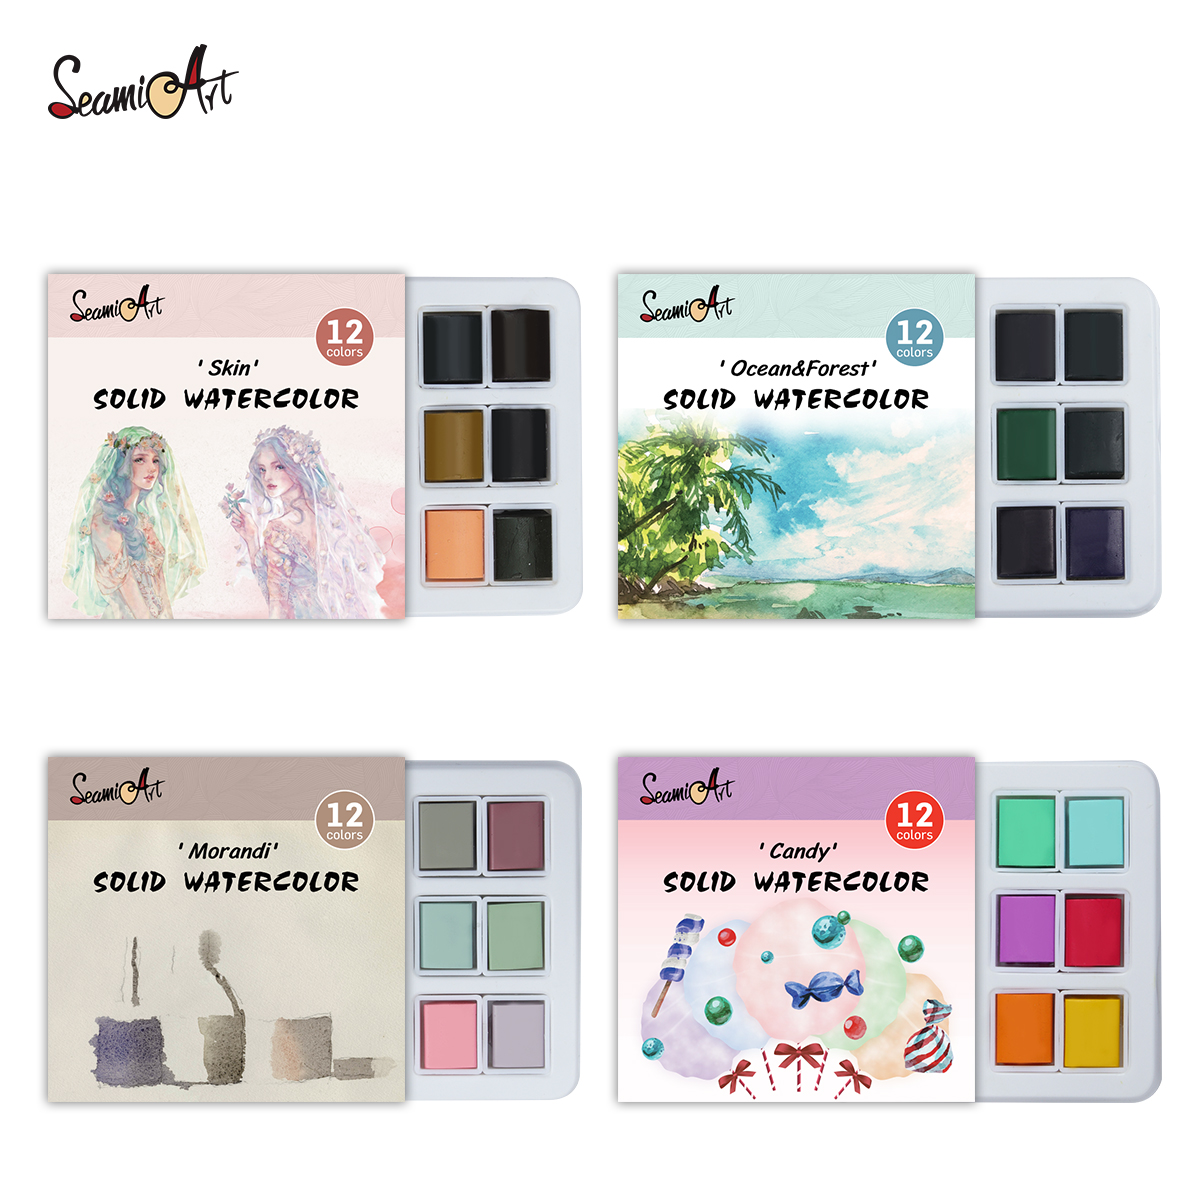 12 colors solid watercolor set, watercolor travel set, portable watercolor kit